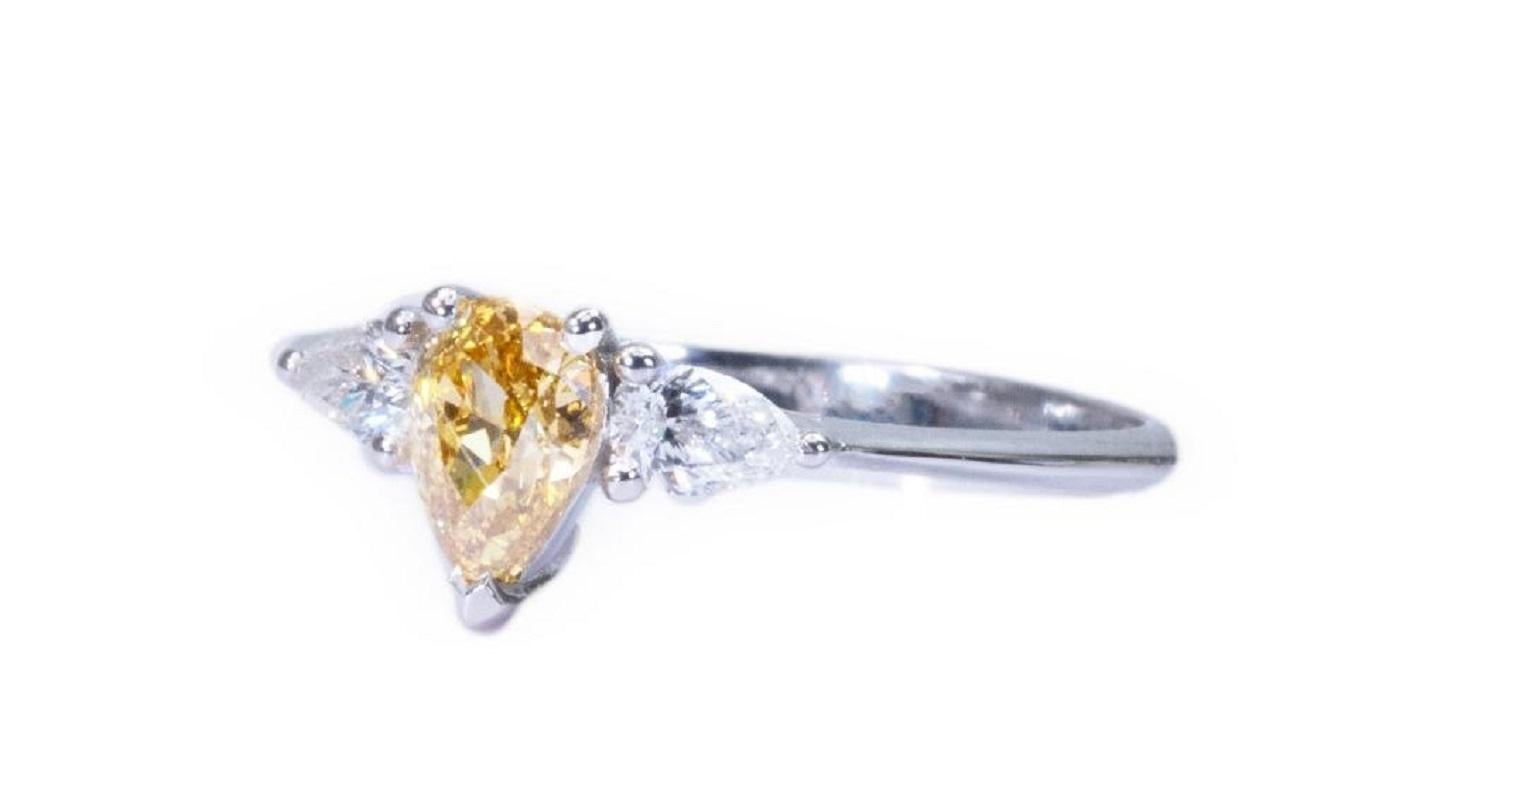 Beautiful 18k White Gold Three Stone Ring with 0.77 ct Natural Diamond- AIG cert 1